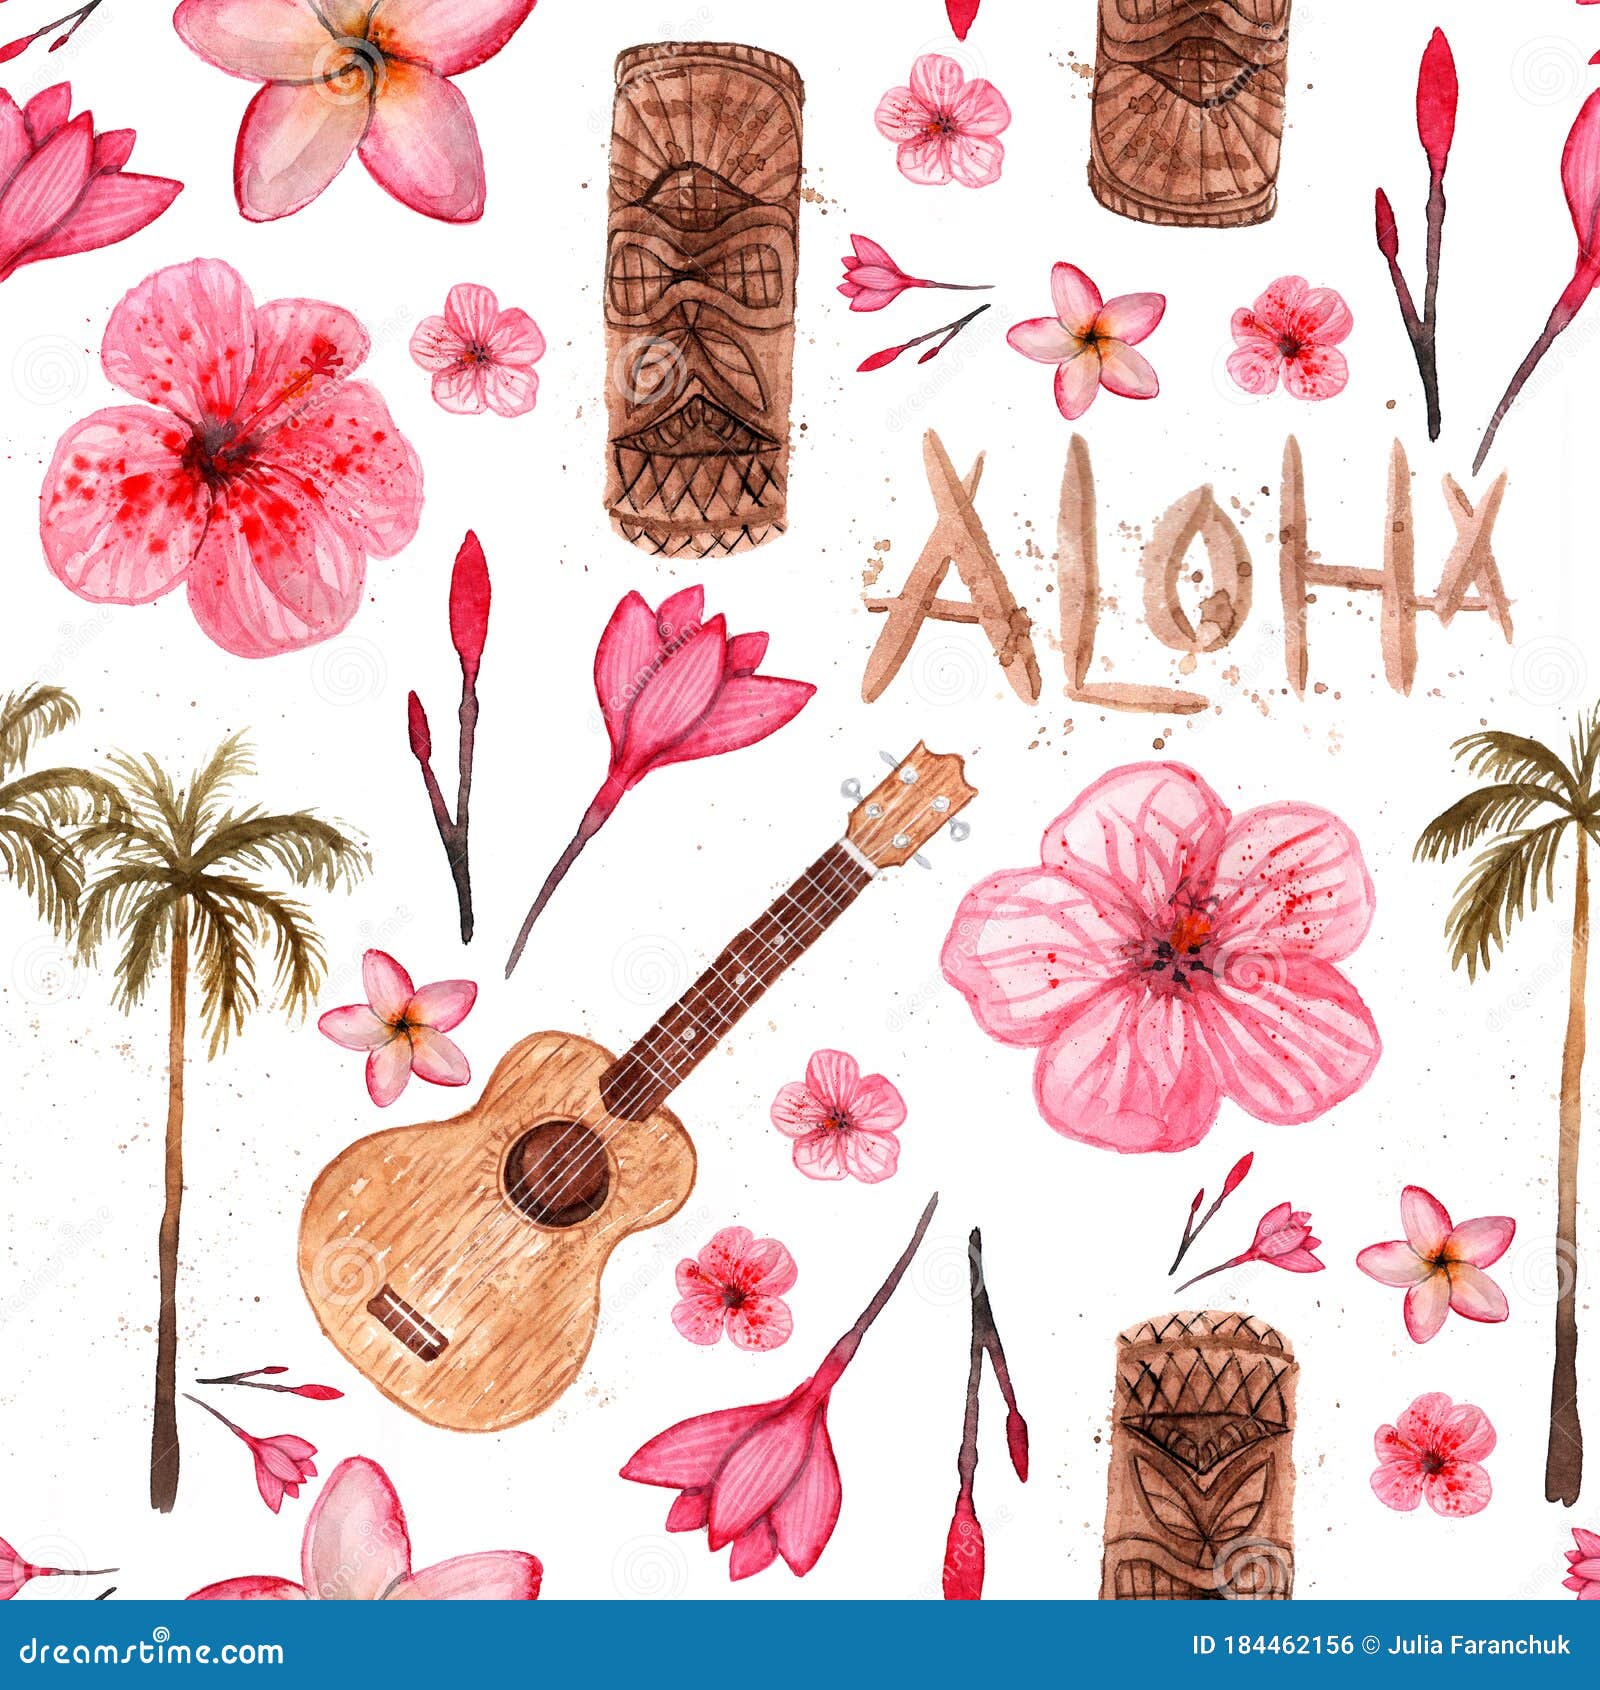 hawaiian simbols - luau, aloha, tiki, ukulele, plumeria, hibiscus, palm tree. seamless pattern